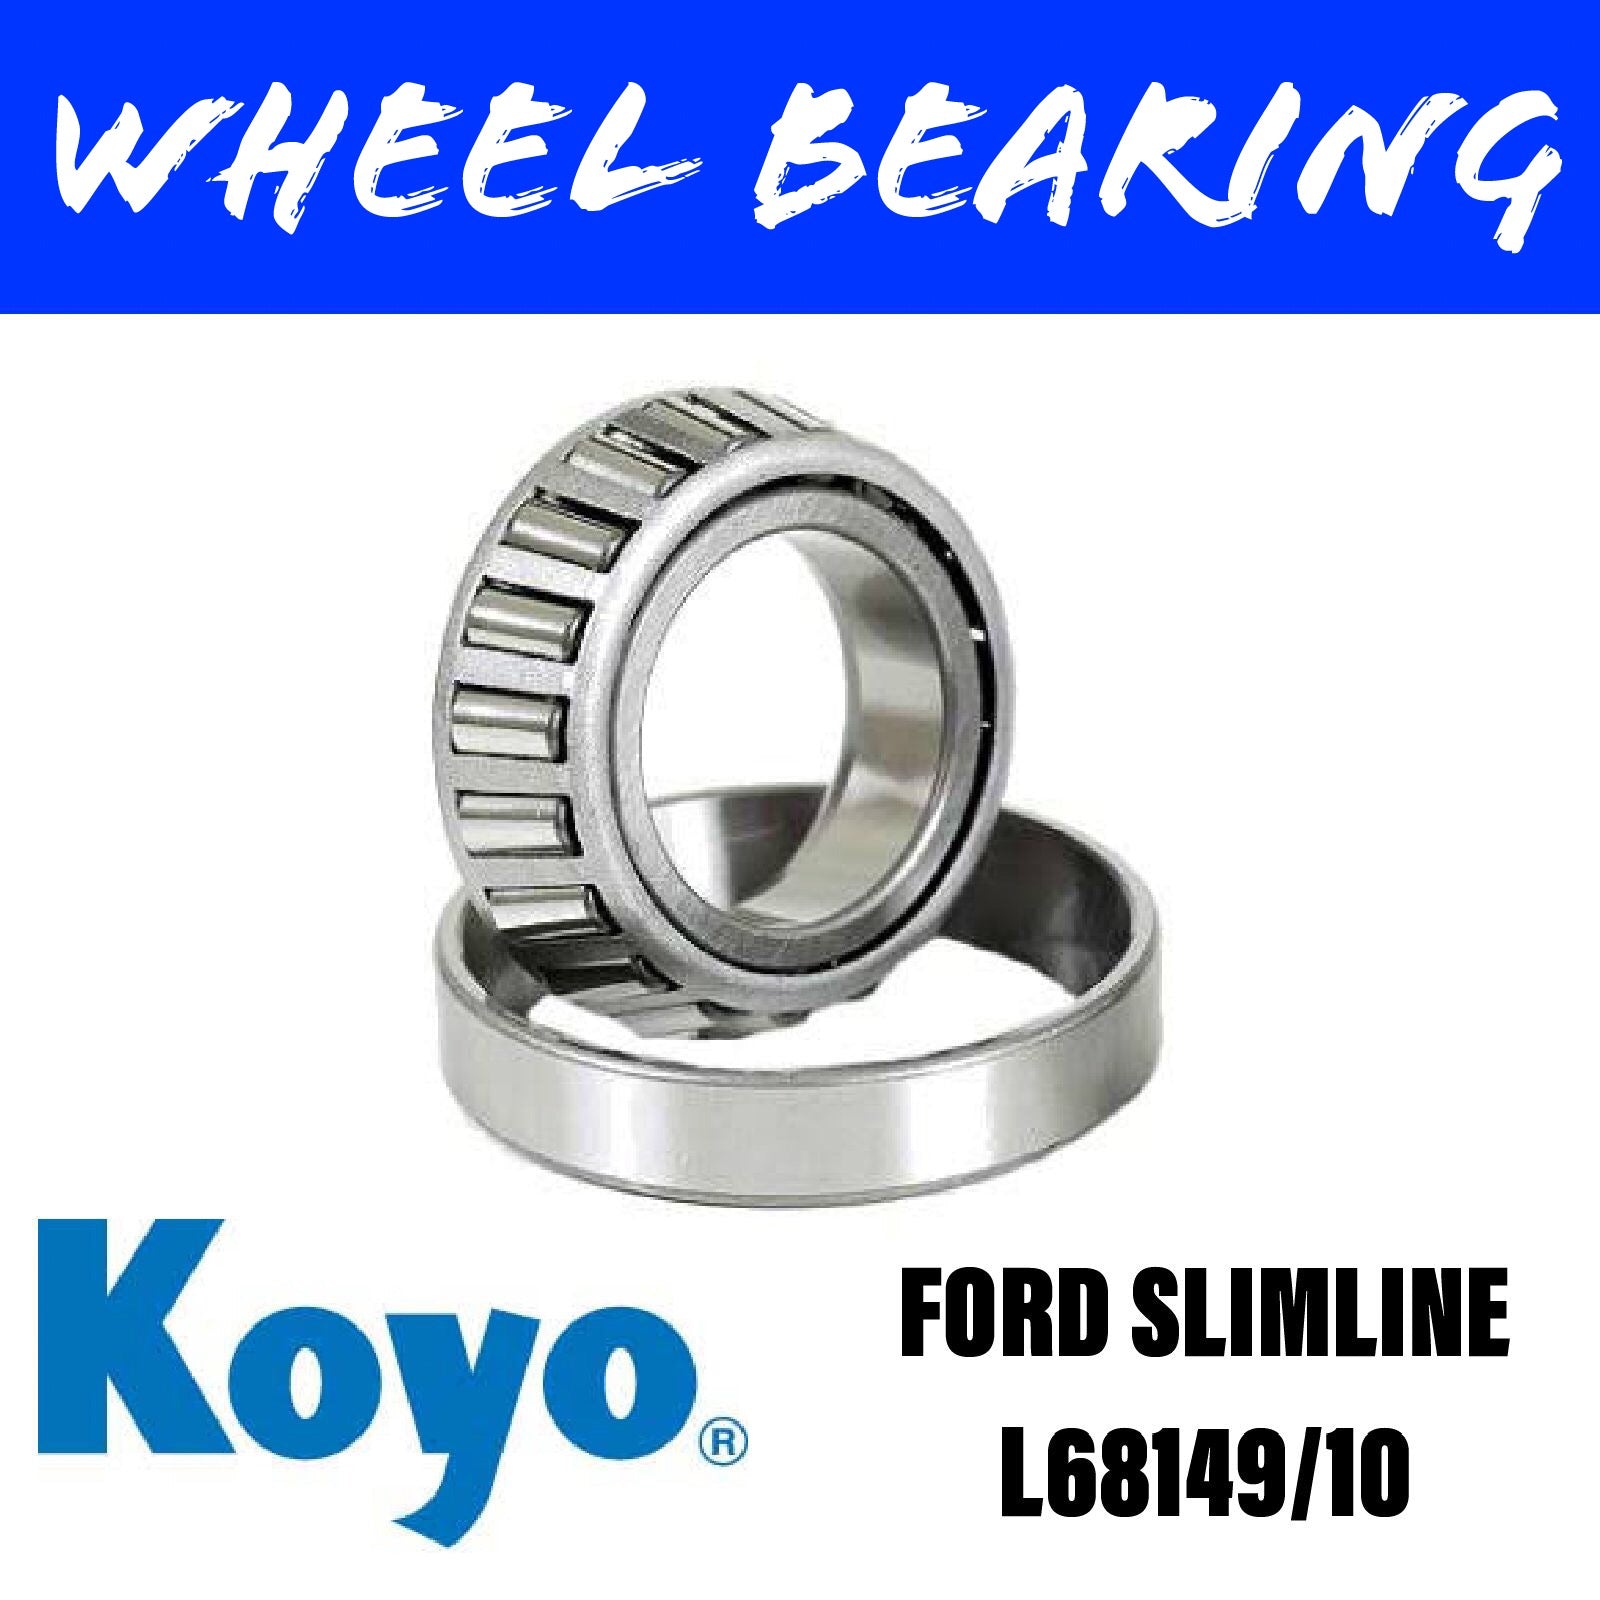 KOYO L68149/10 Wheel Bearing